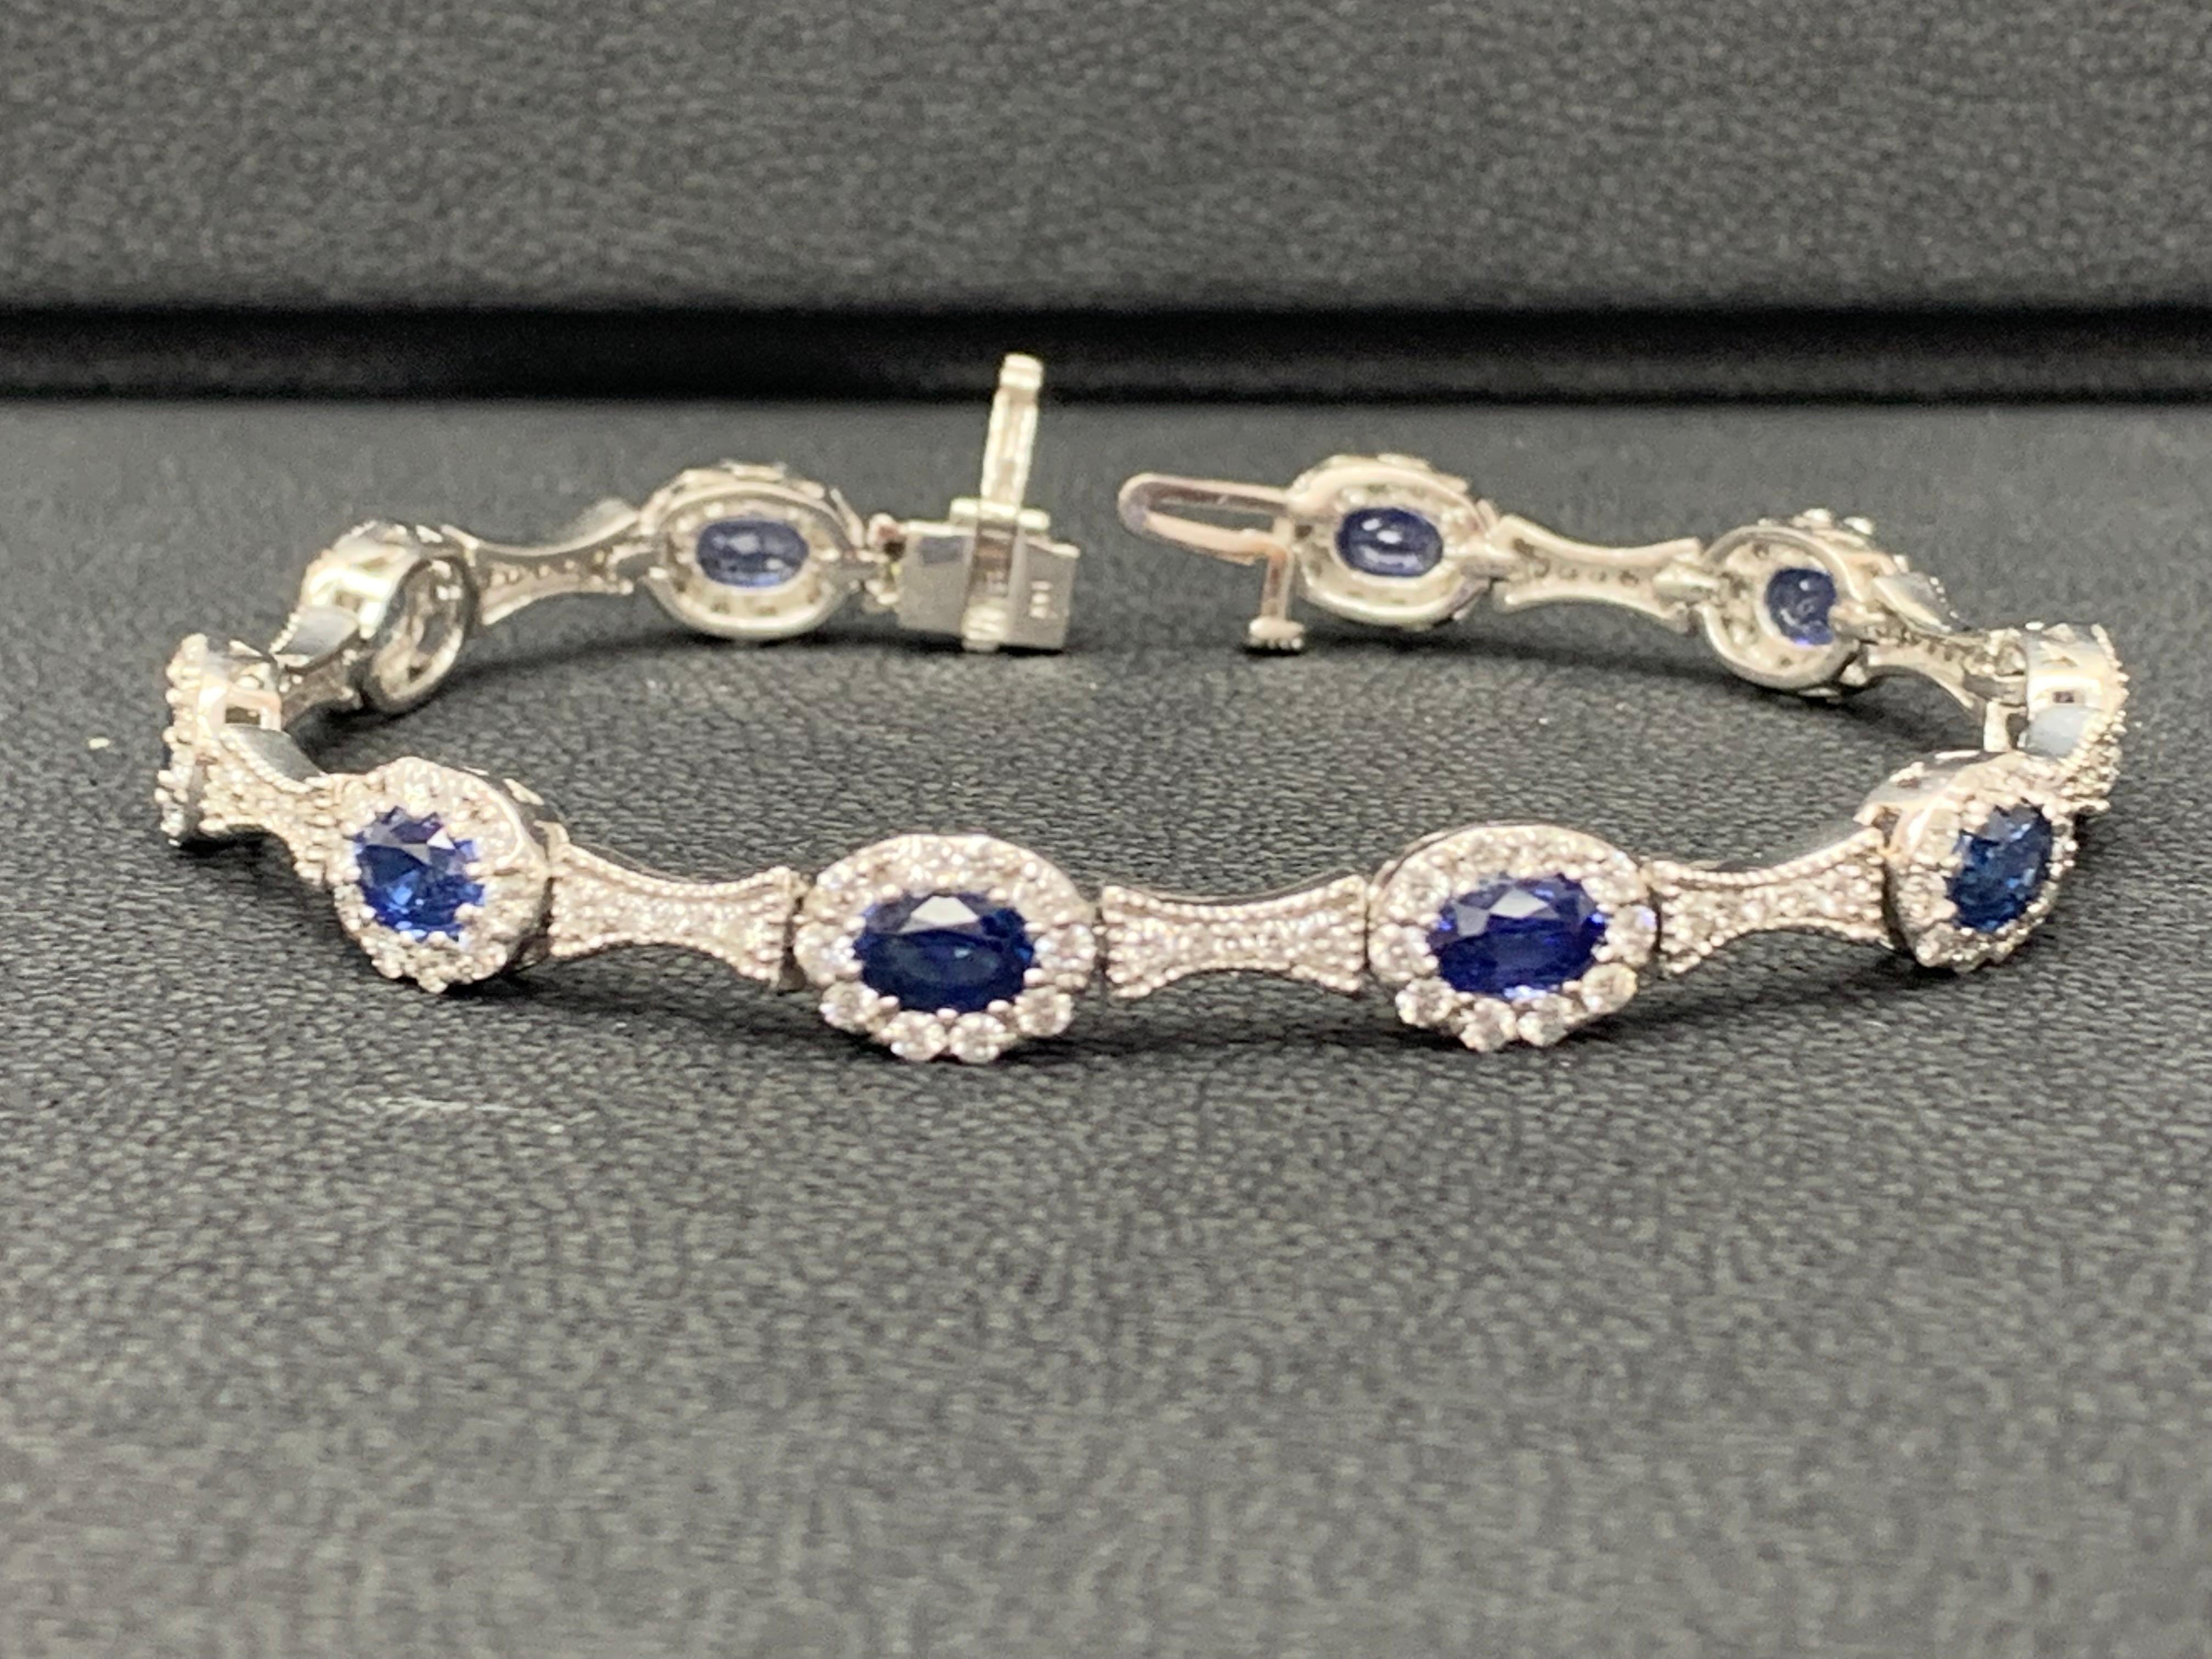 Modern 6.19 Carat Oval Cut Blue Sapphire Diamond Bracelet in 14K White Gold For Sale